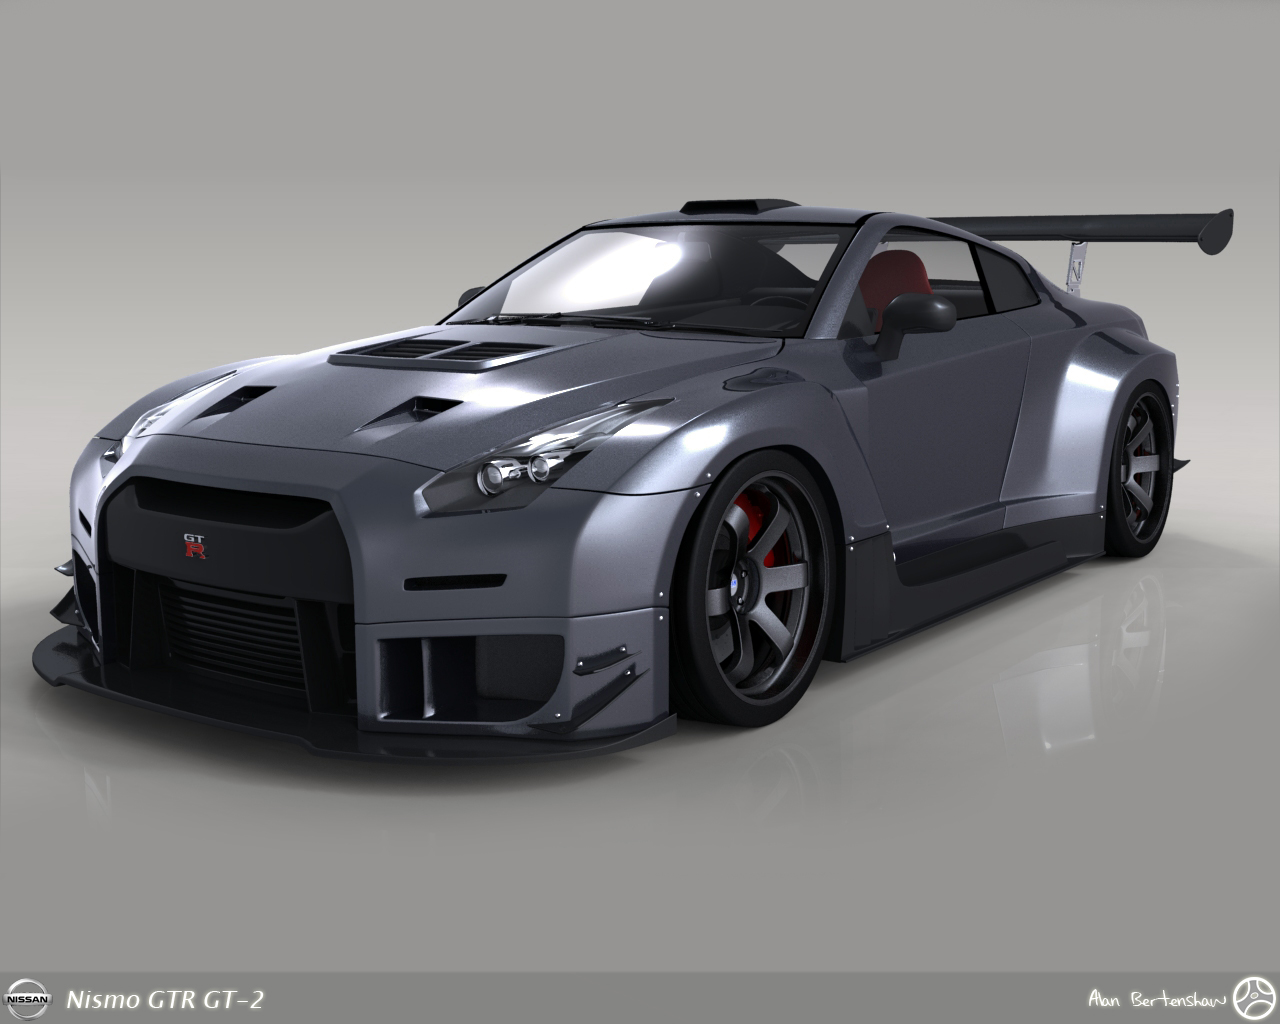 Nissan GT-R R36 concept NISMO black by rookiejeno on DeviantArt